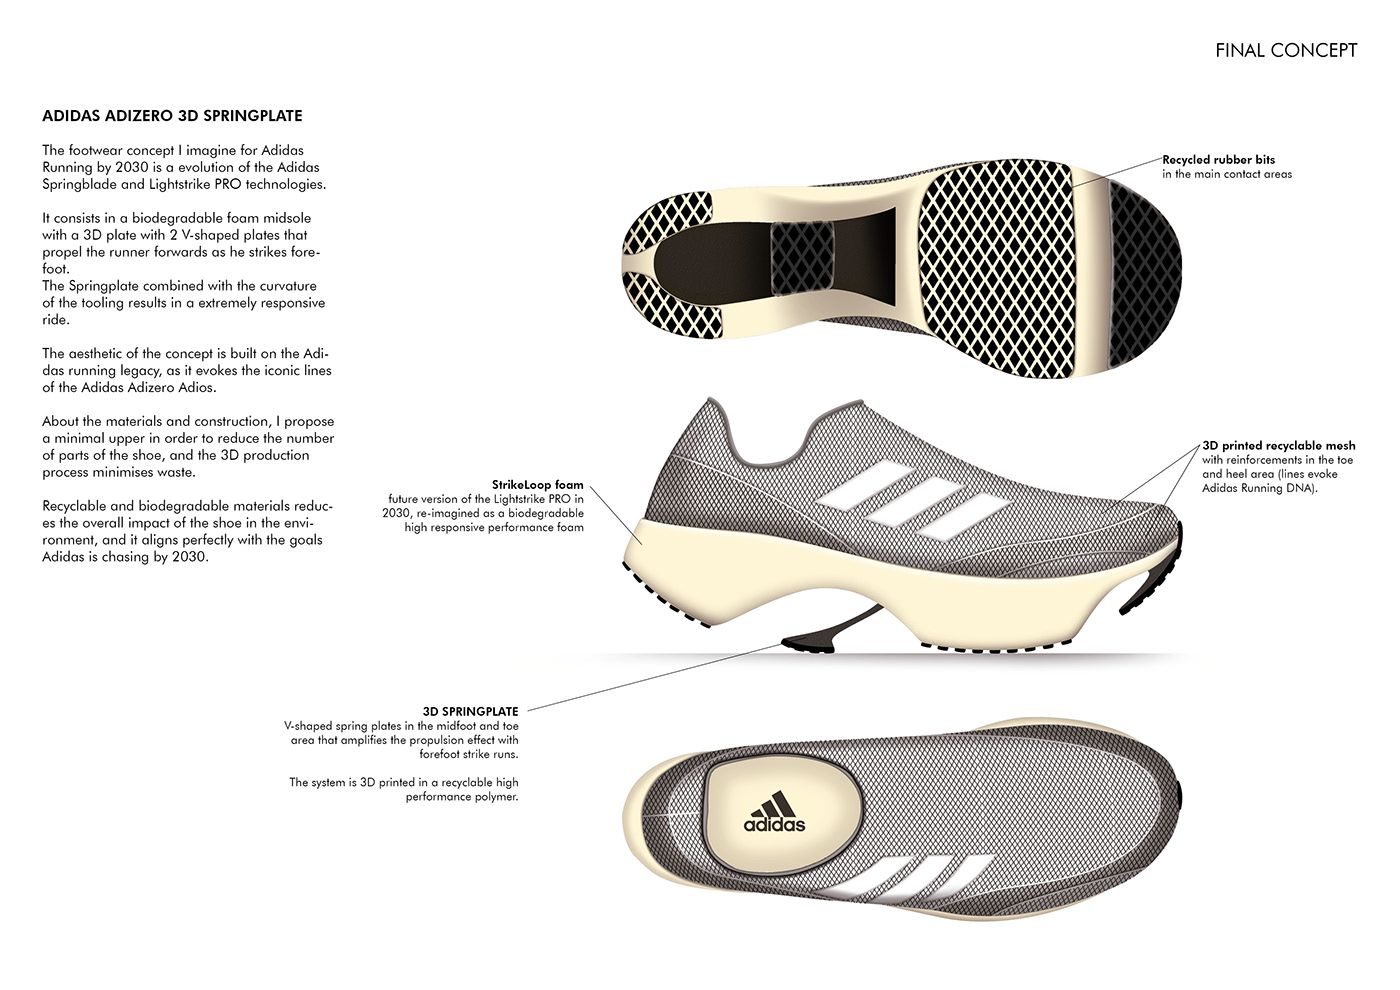 adidas adizero concept footwear footwear design future running sneakers sports Technology